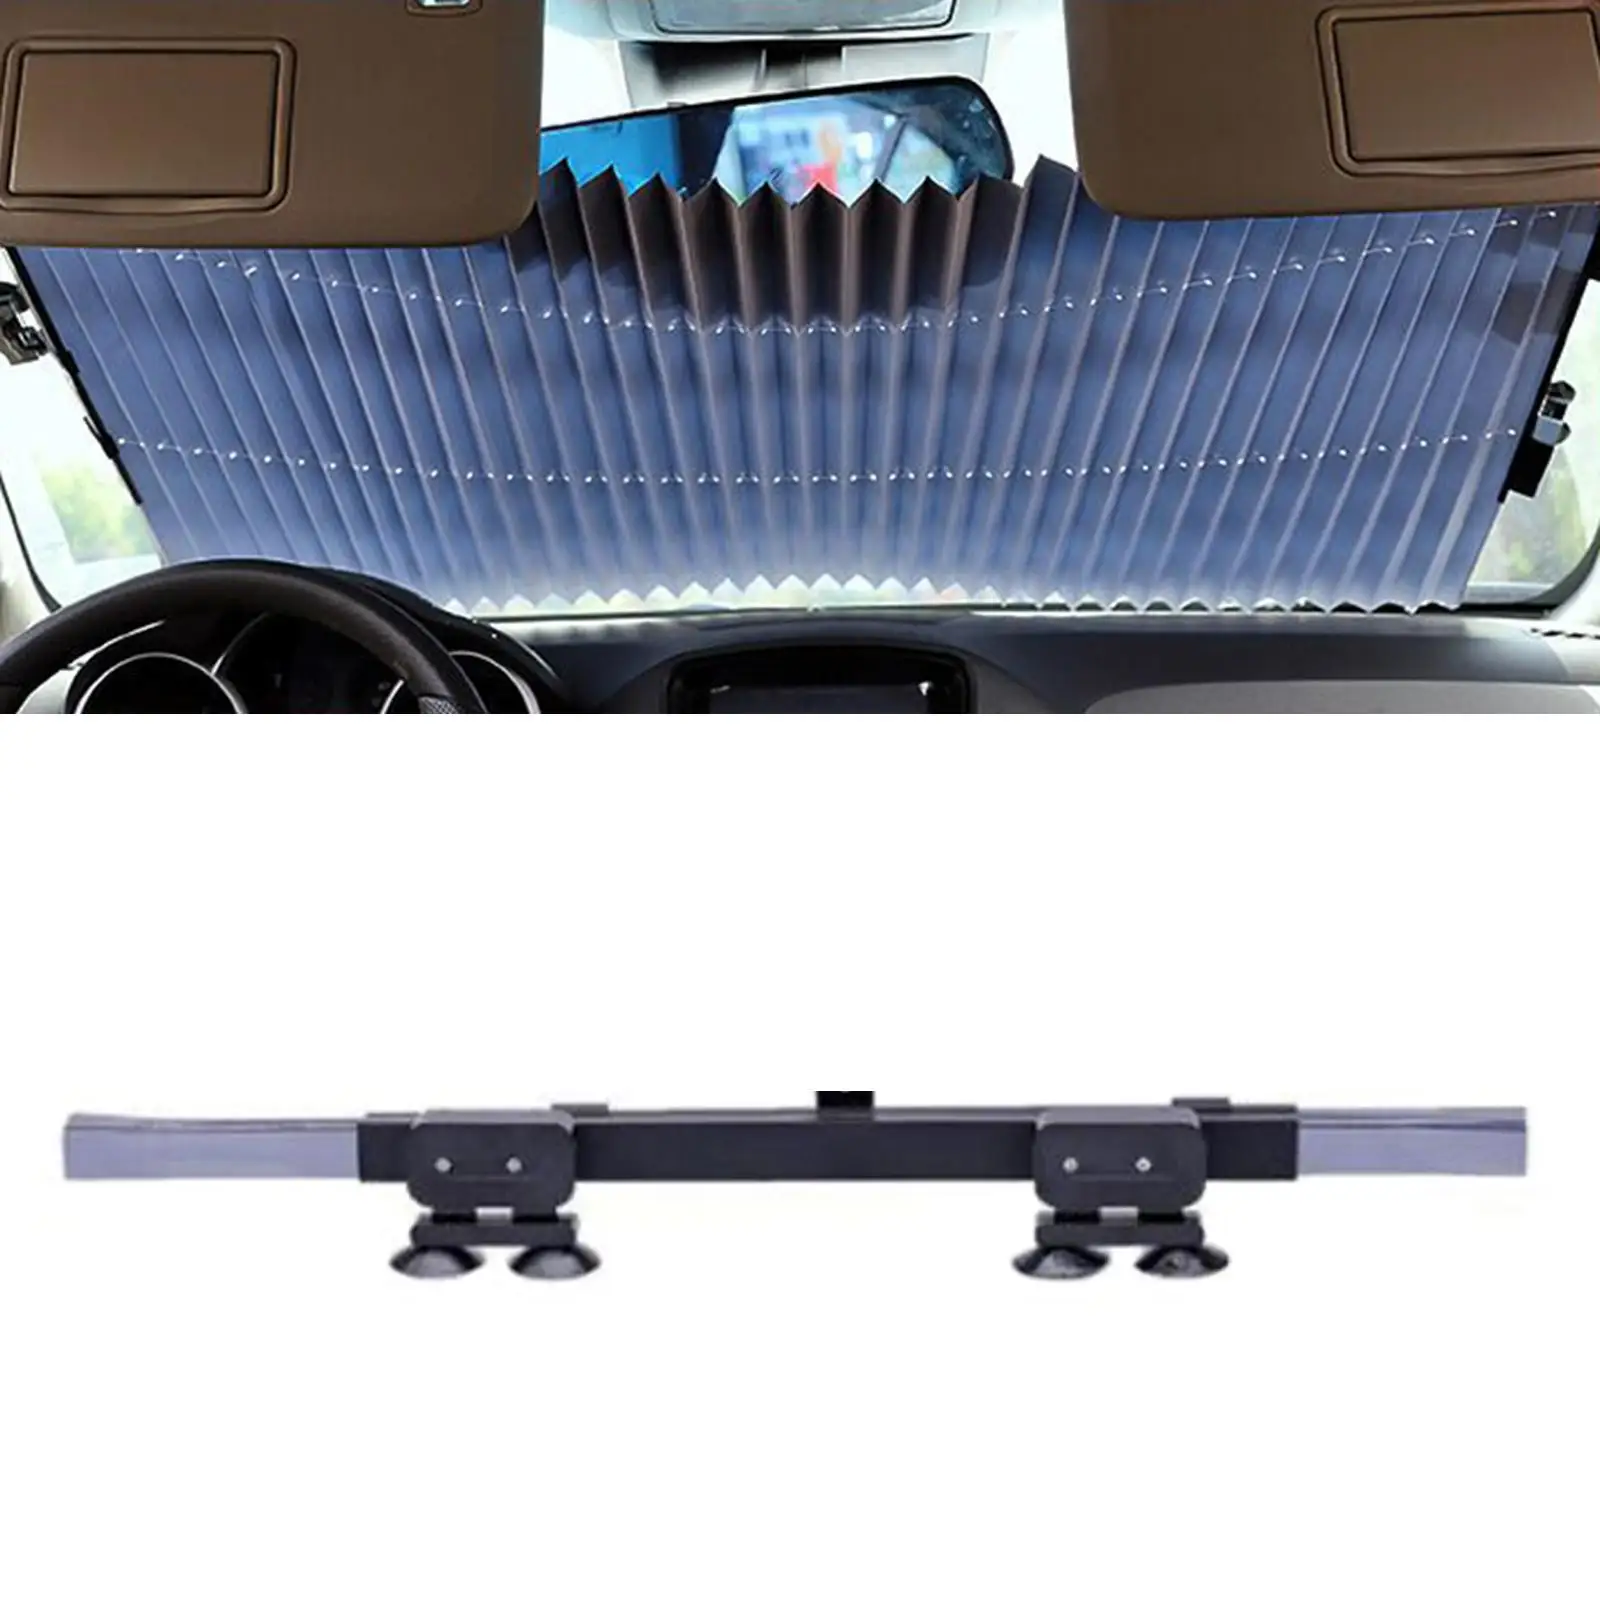 Car Window Sun Shade Cover Curtain Foldable Anti UV Sun Visors Fit for Large Vehicles Motorhome Automotive Keep Vehicle Cool